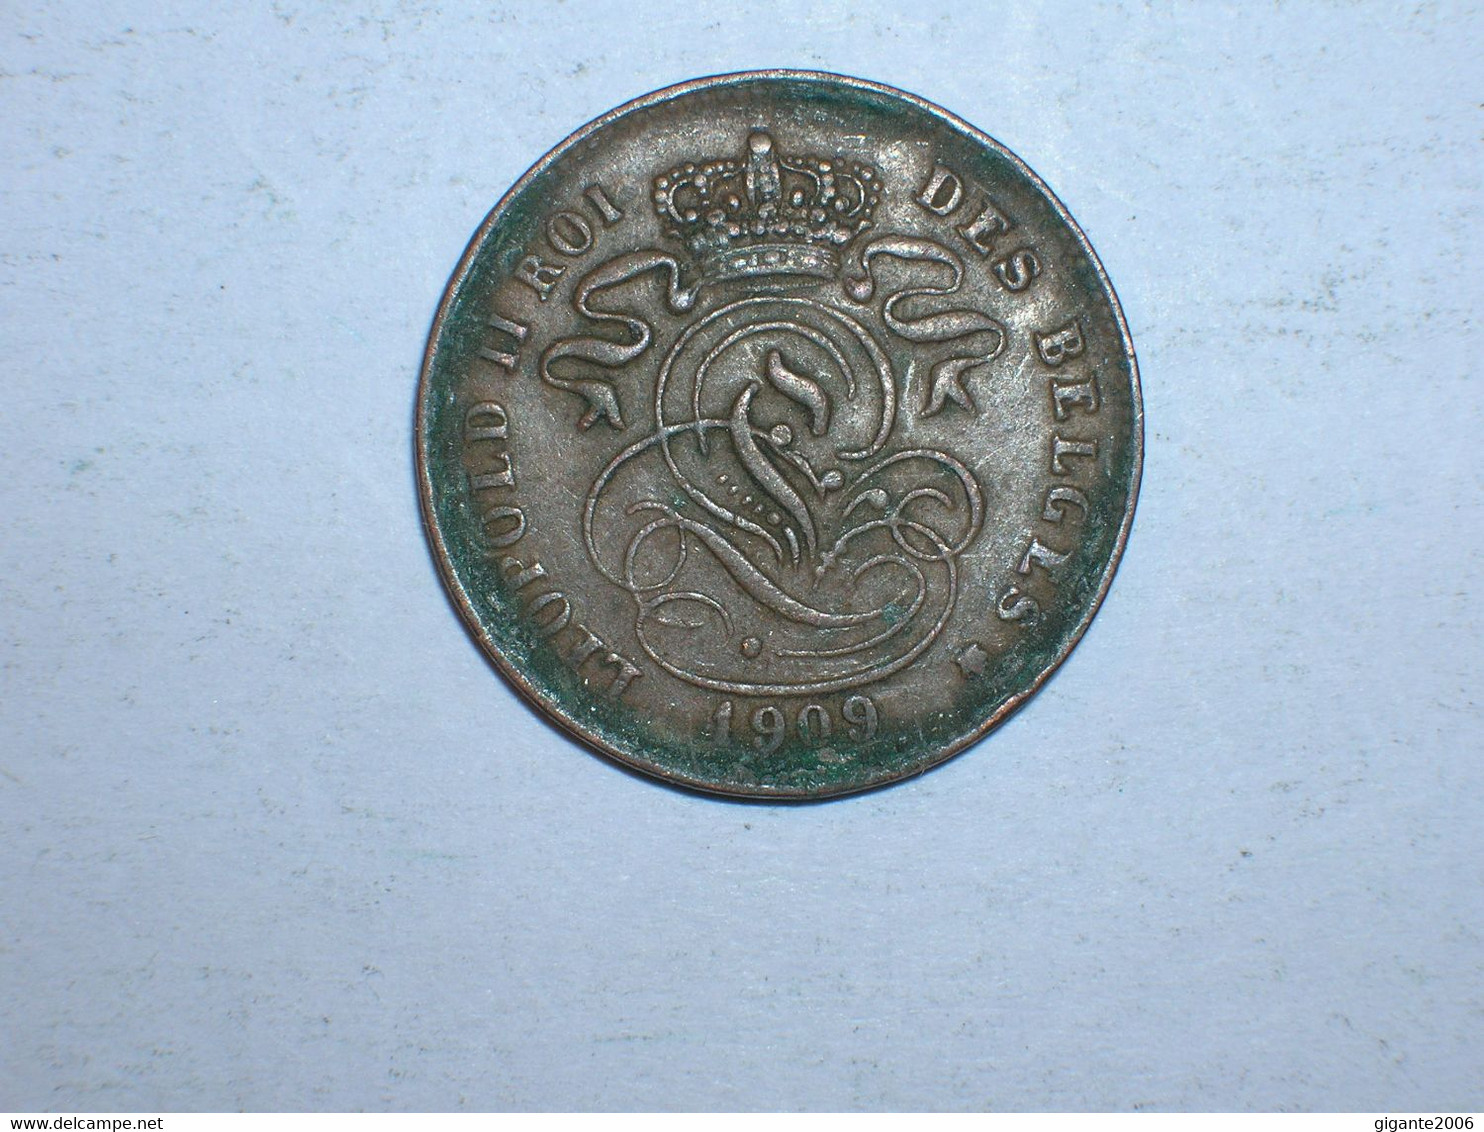 BELGICA 2 CENTIMOS 1909 FR (9211) - 2 Cents